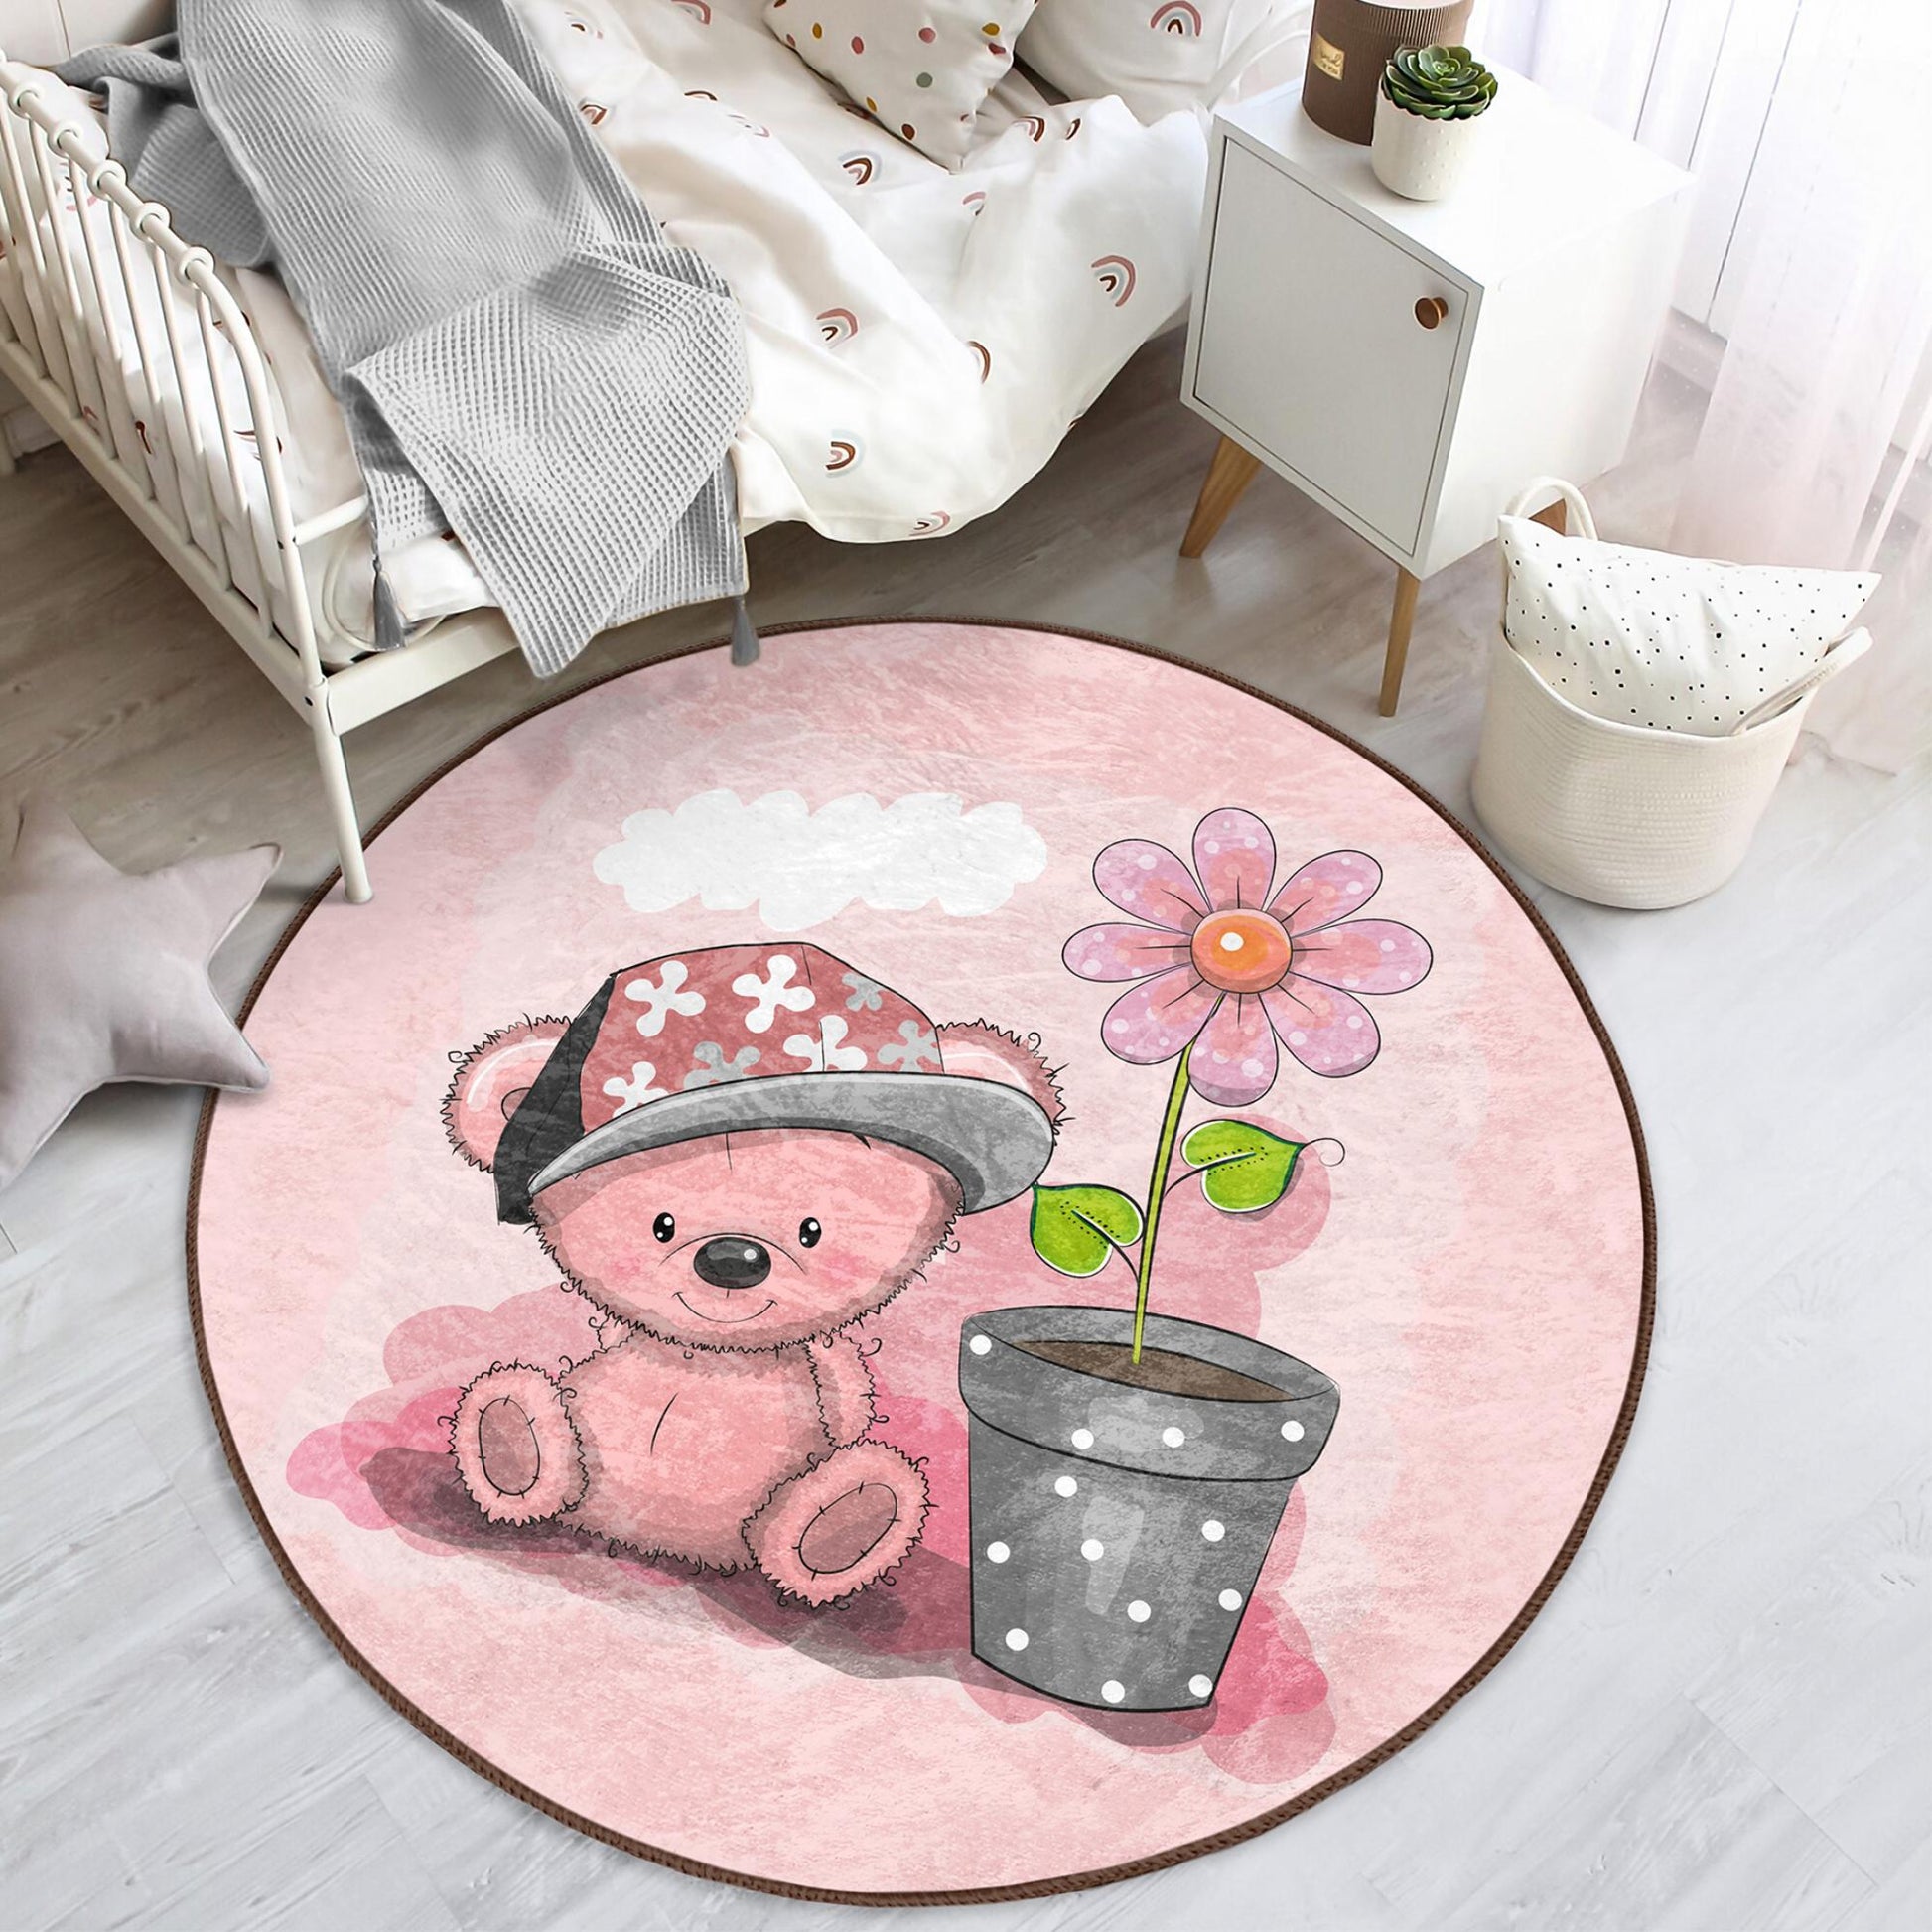 Whimsical girls room rug showcasing an adorable pink bear for playful decor.